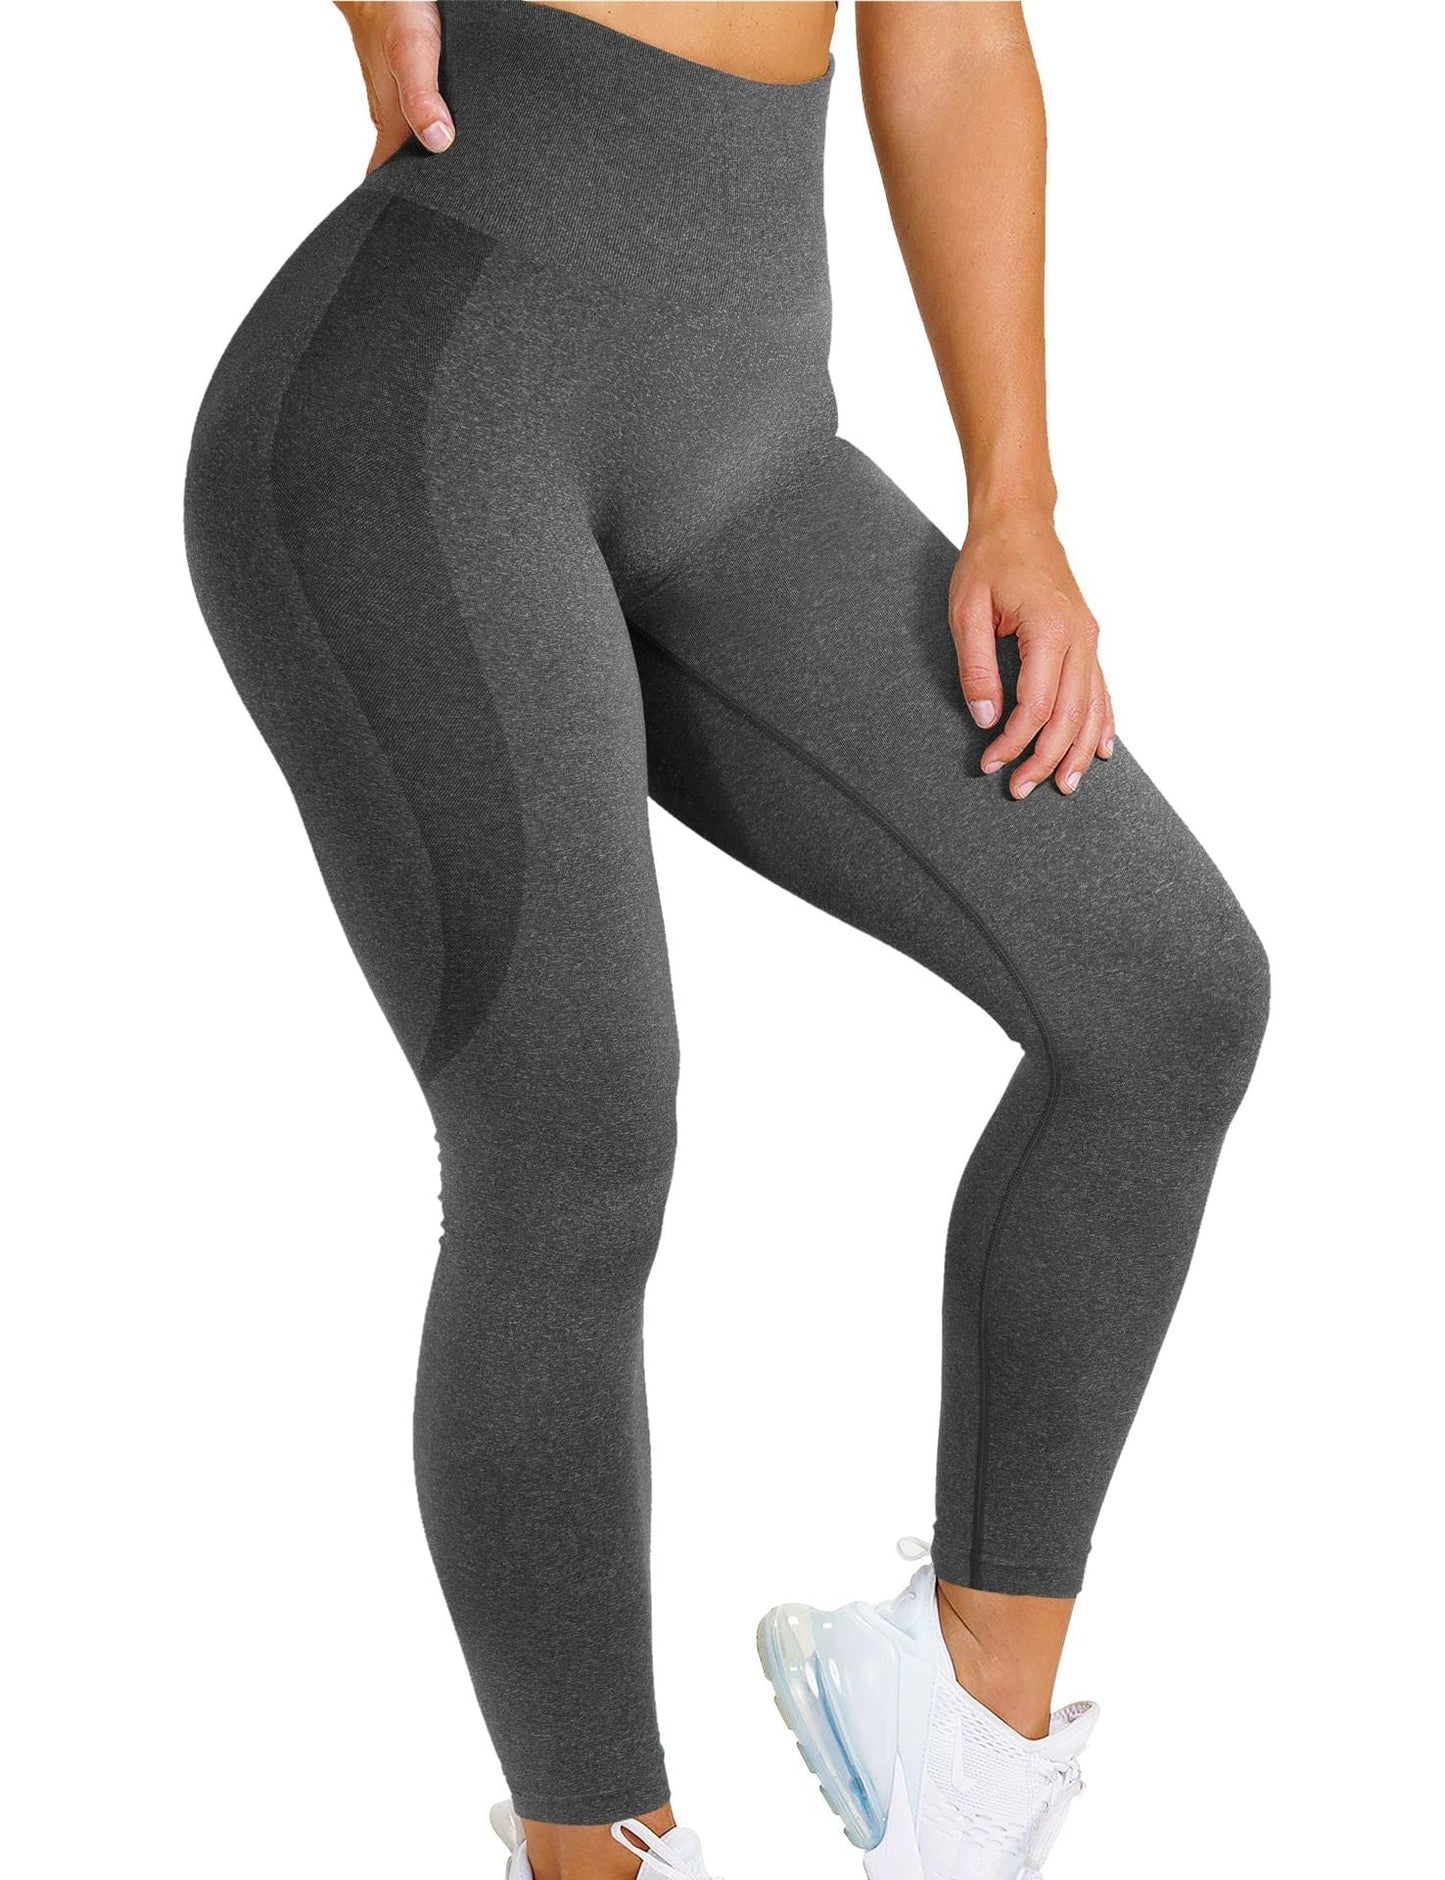 Women Hot Style Snowflake Smiley Pants Jacquard Seamless Yoga Pants Fitness Cropped Pants Yoga leggings dsers hemp gray / XS